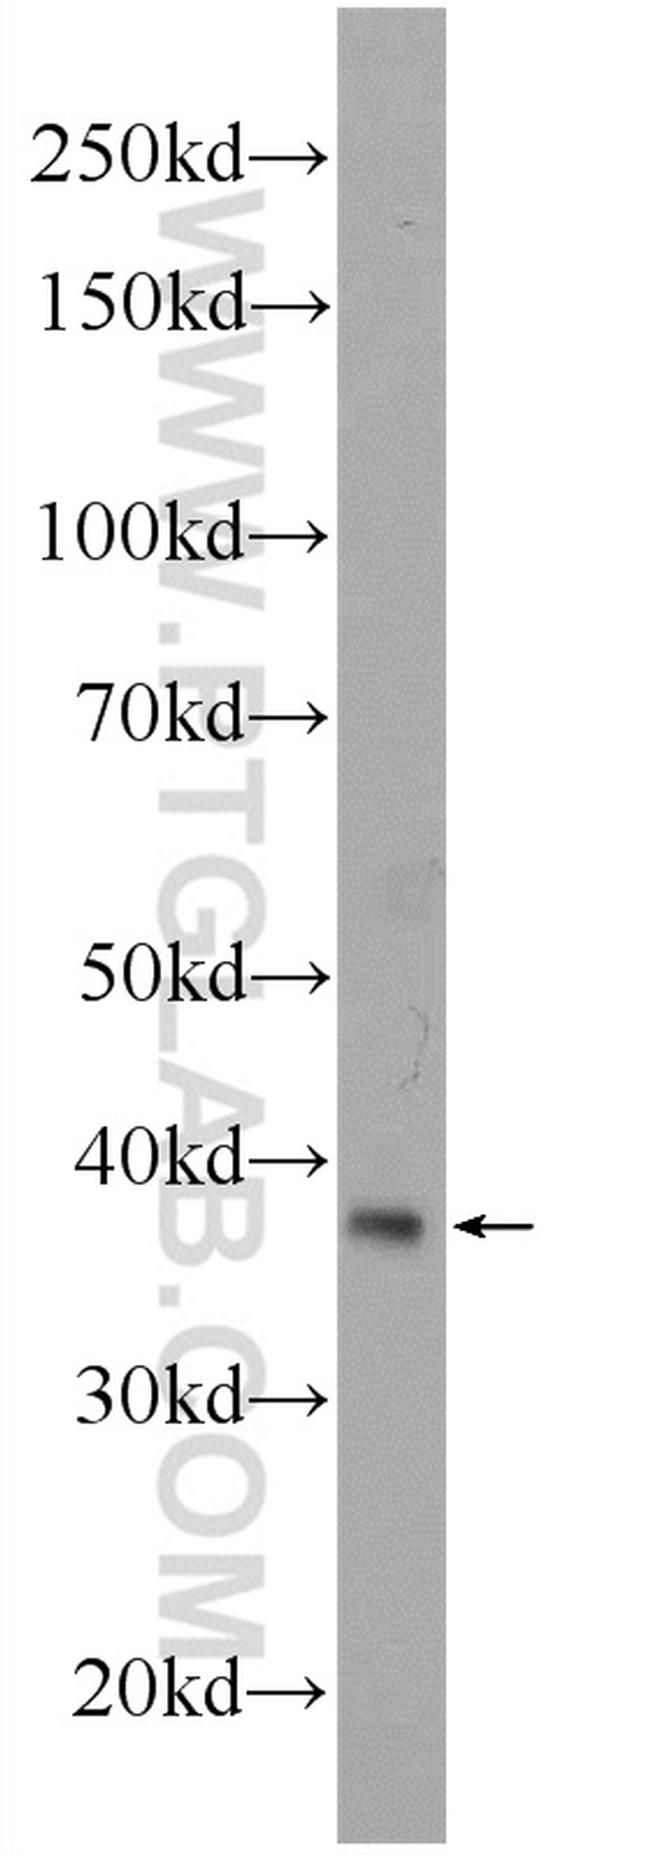 BCAT2 Antibody in Western Blot (WB)